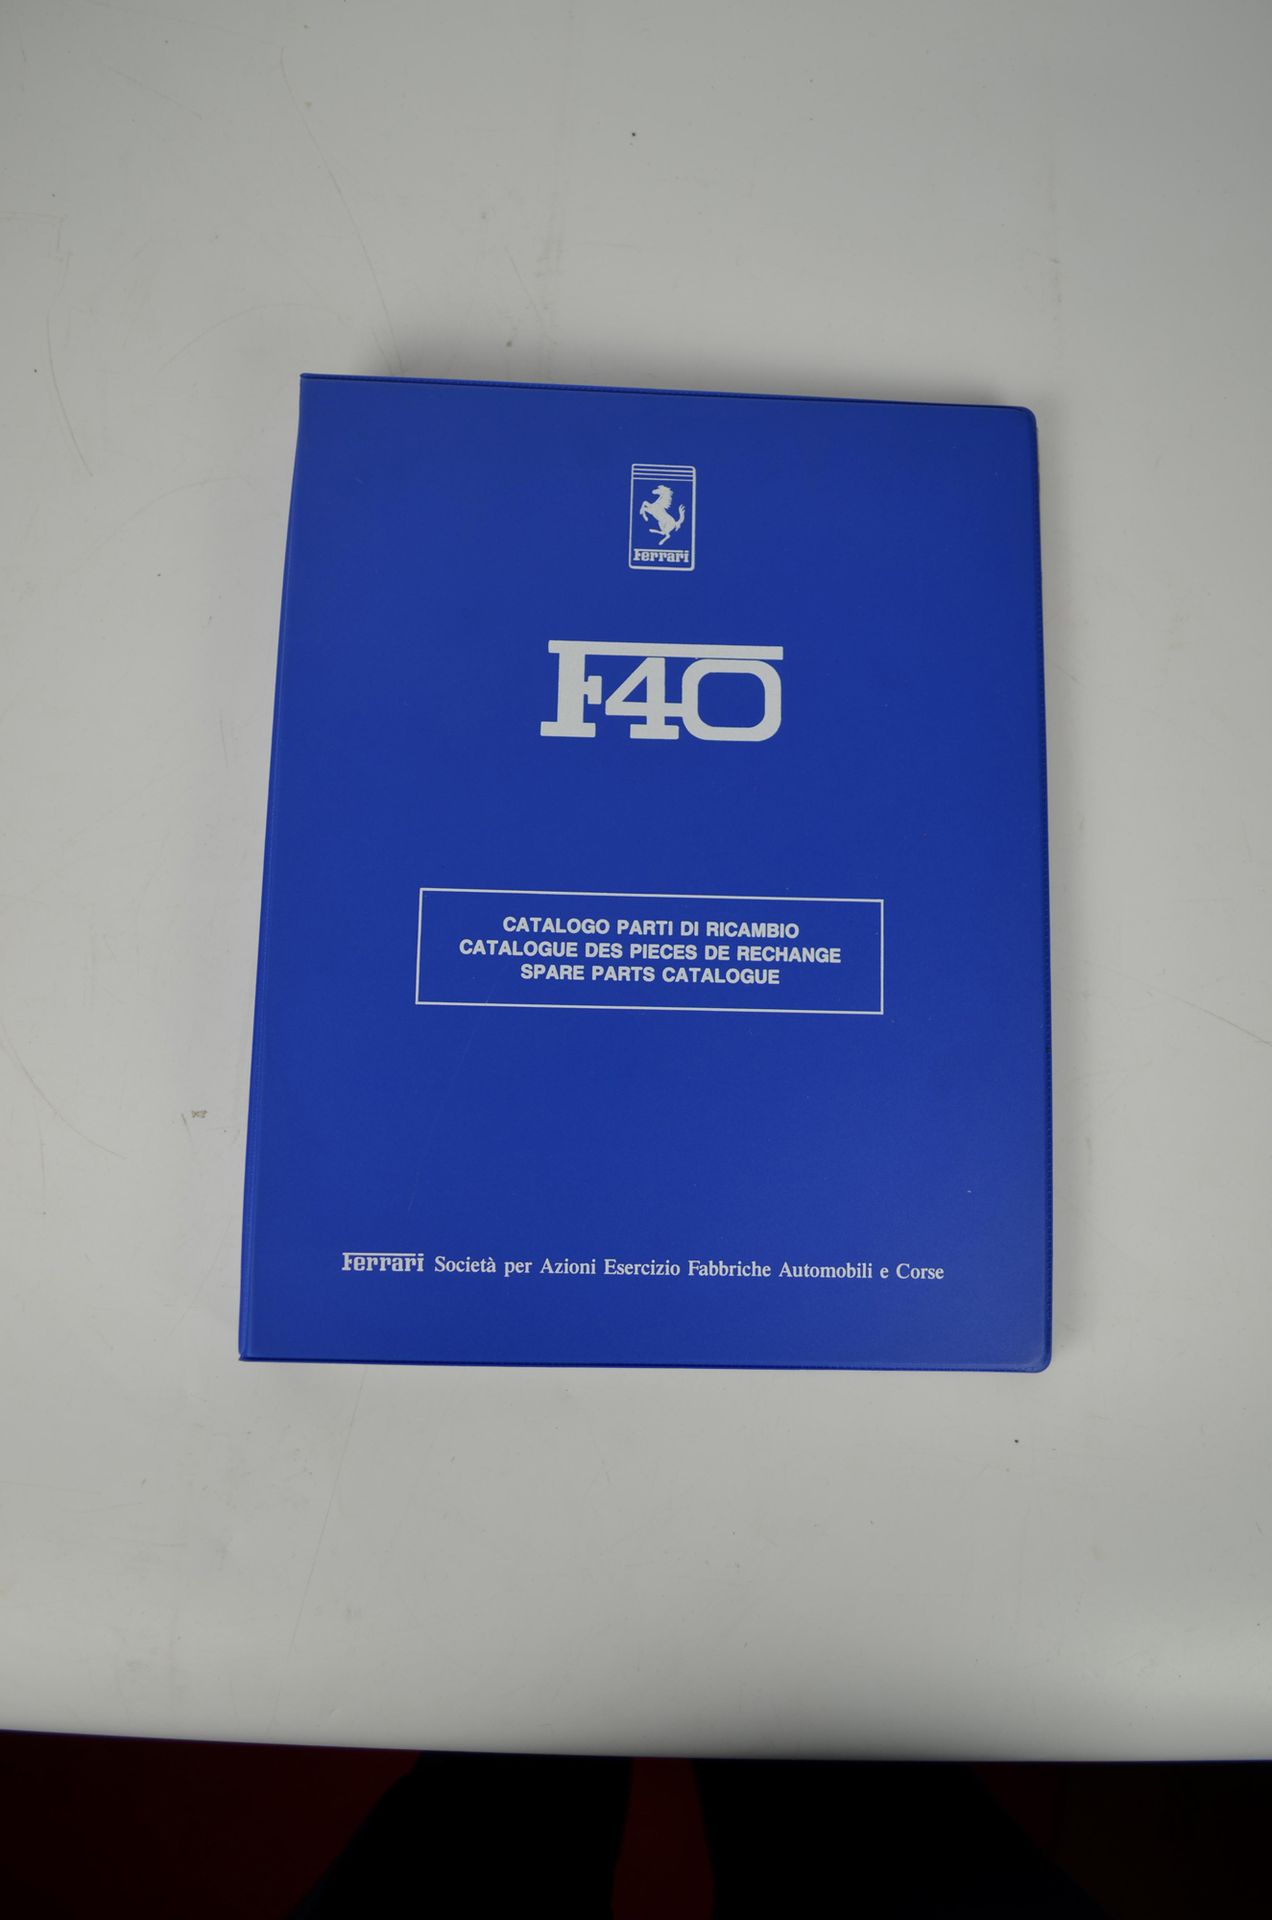 Catalogue de pièces de rechange F40 Ersatzteilkatalog F40